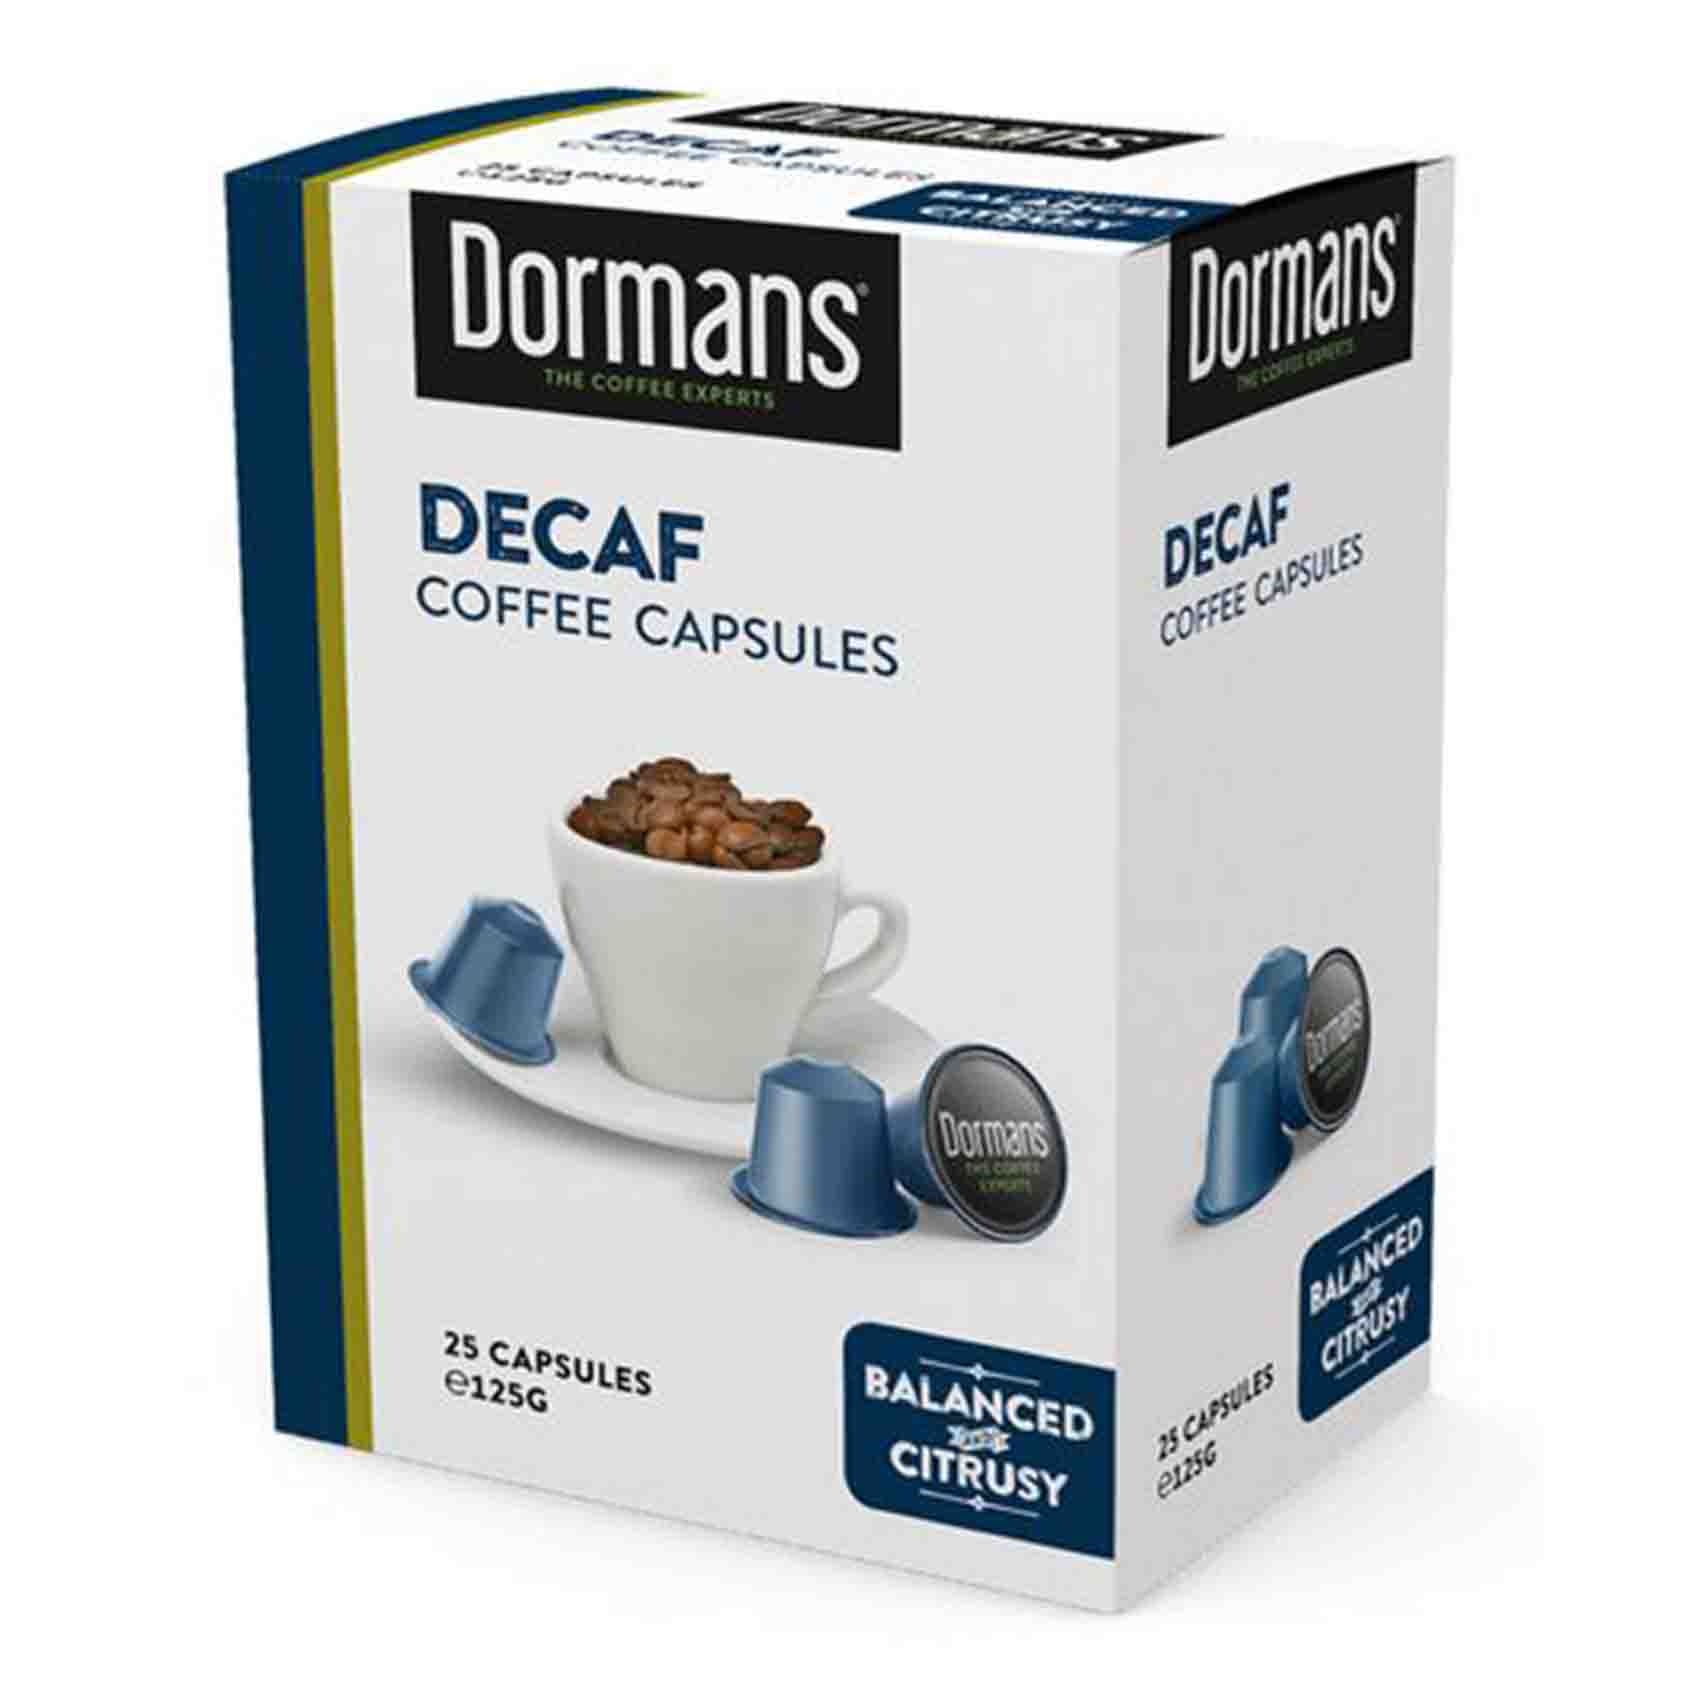 Dormans Decaf Coffee Capsules 5g x 25 Pieces